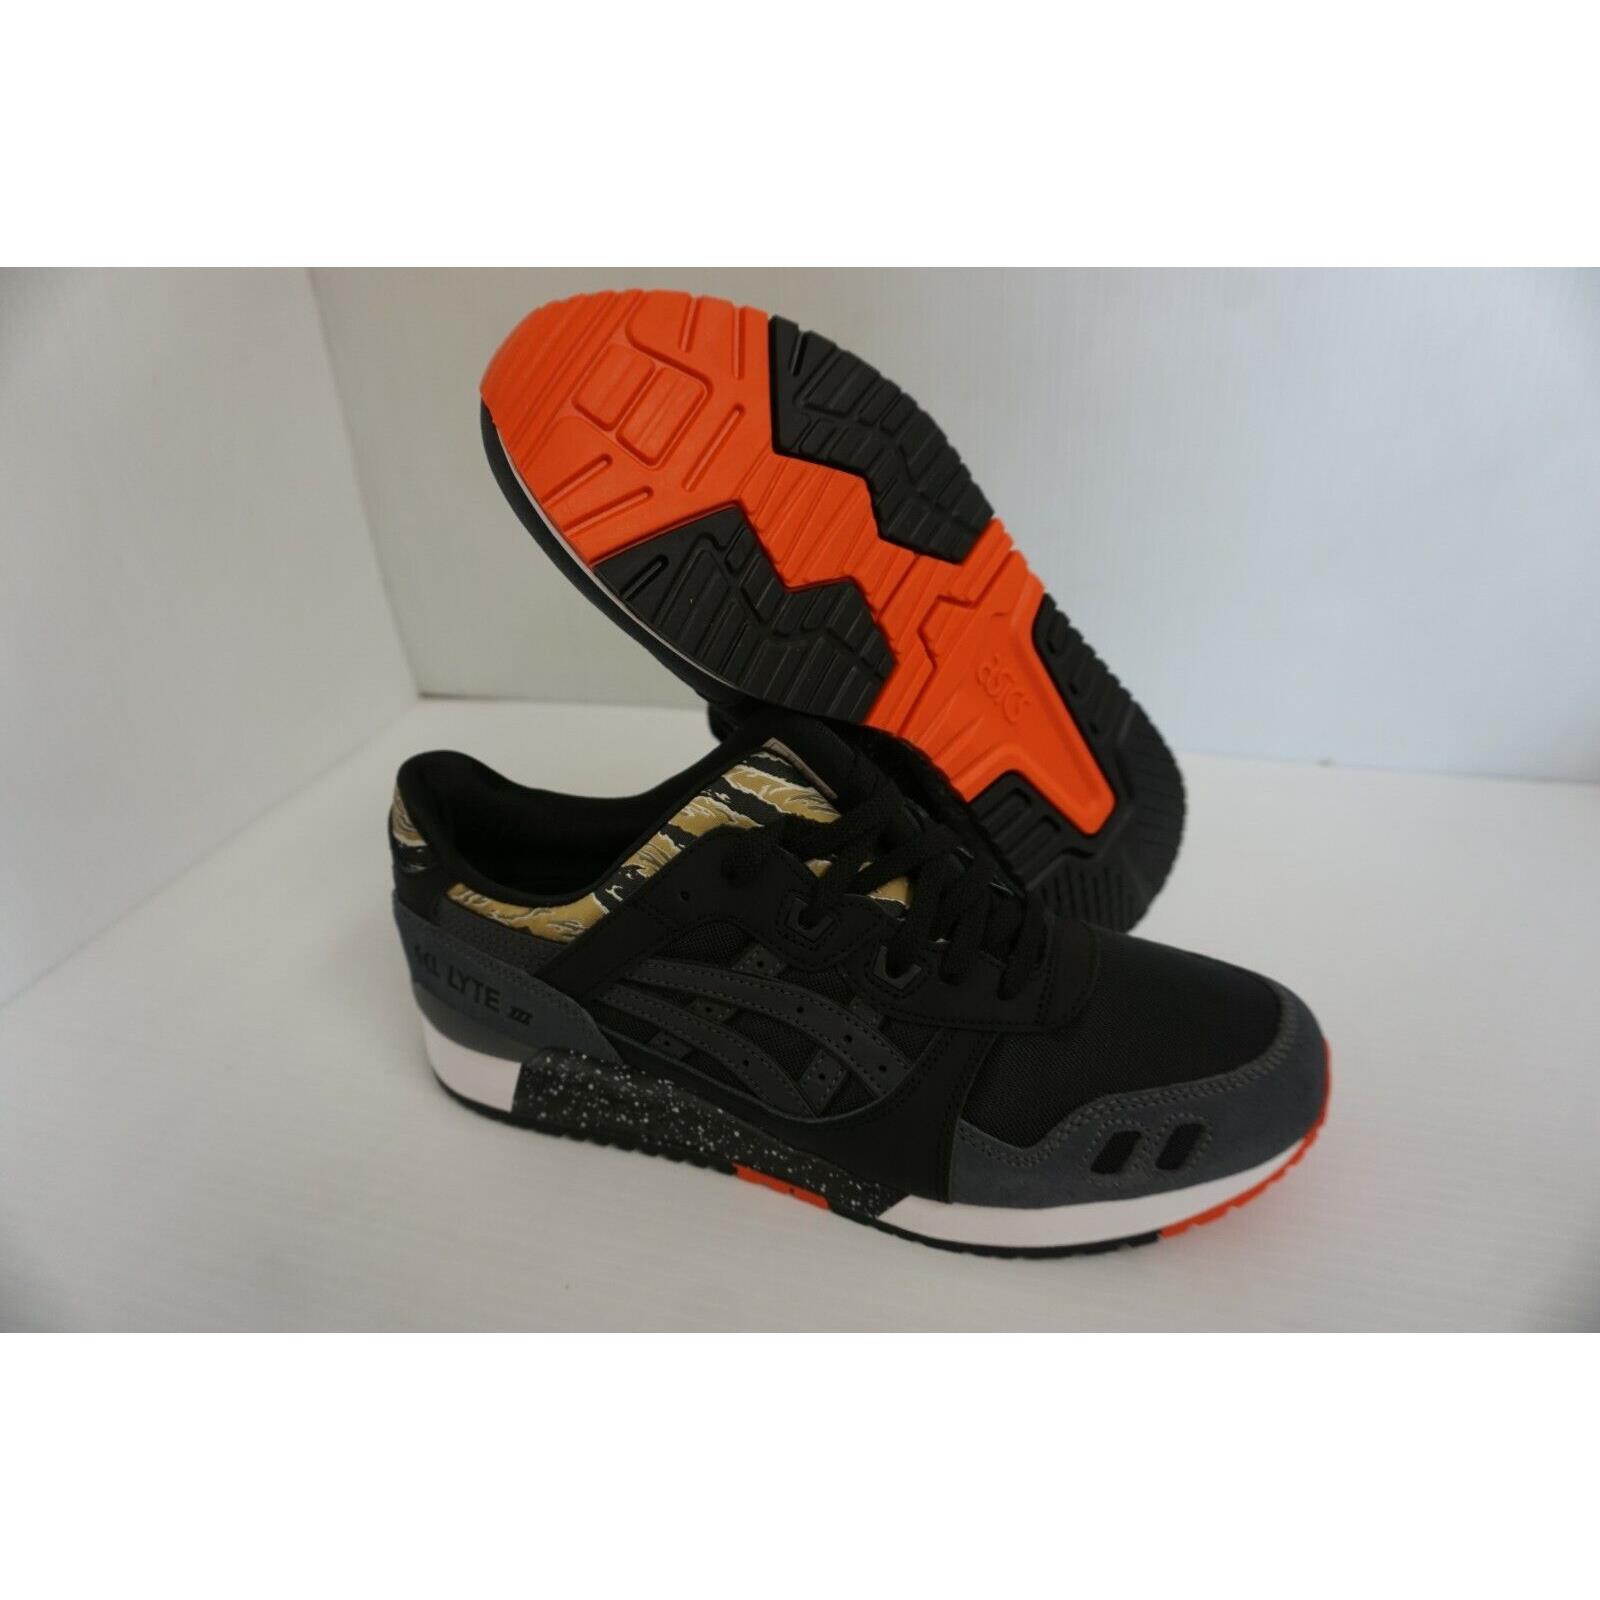 Asics Mens Gel Lyte Iii Running Shoes Tiger Black Orange Size 9 us